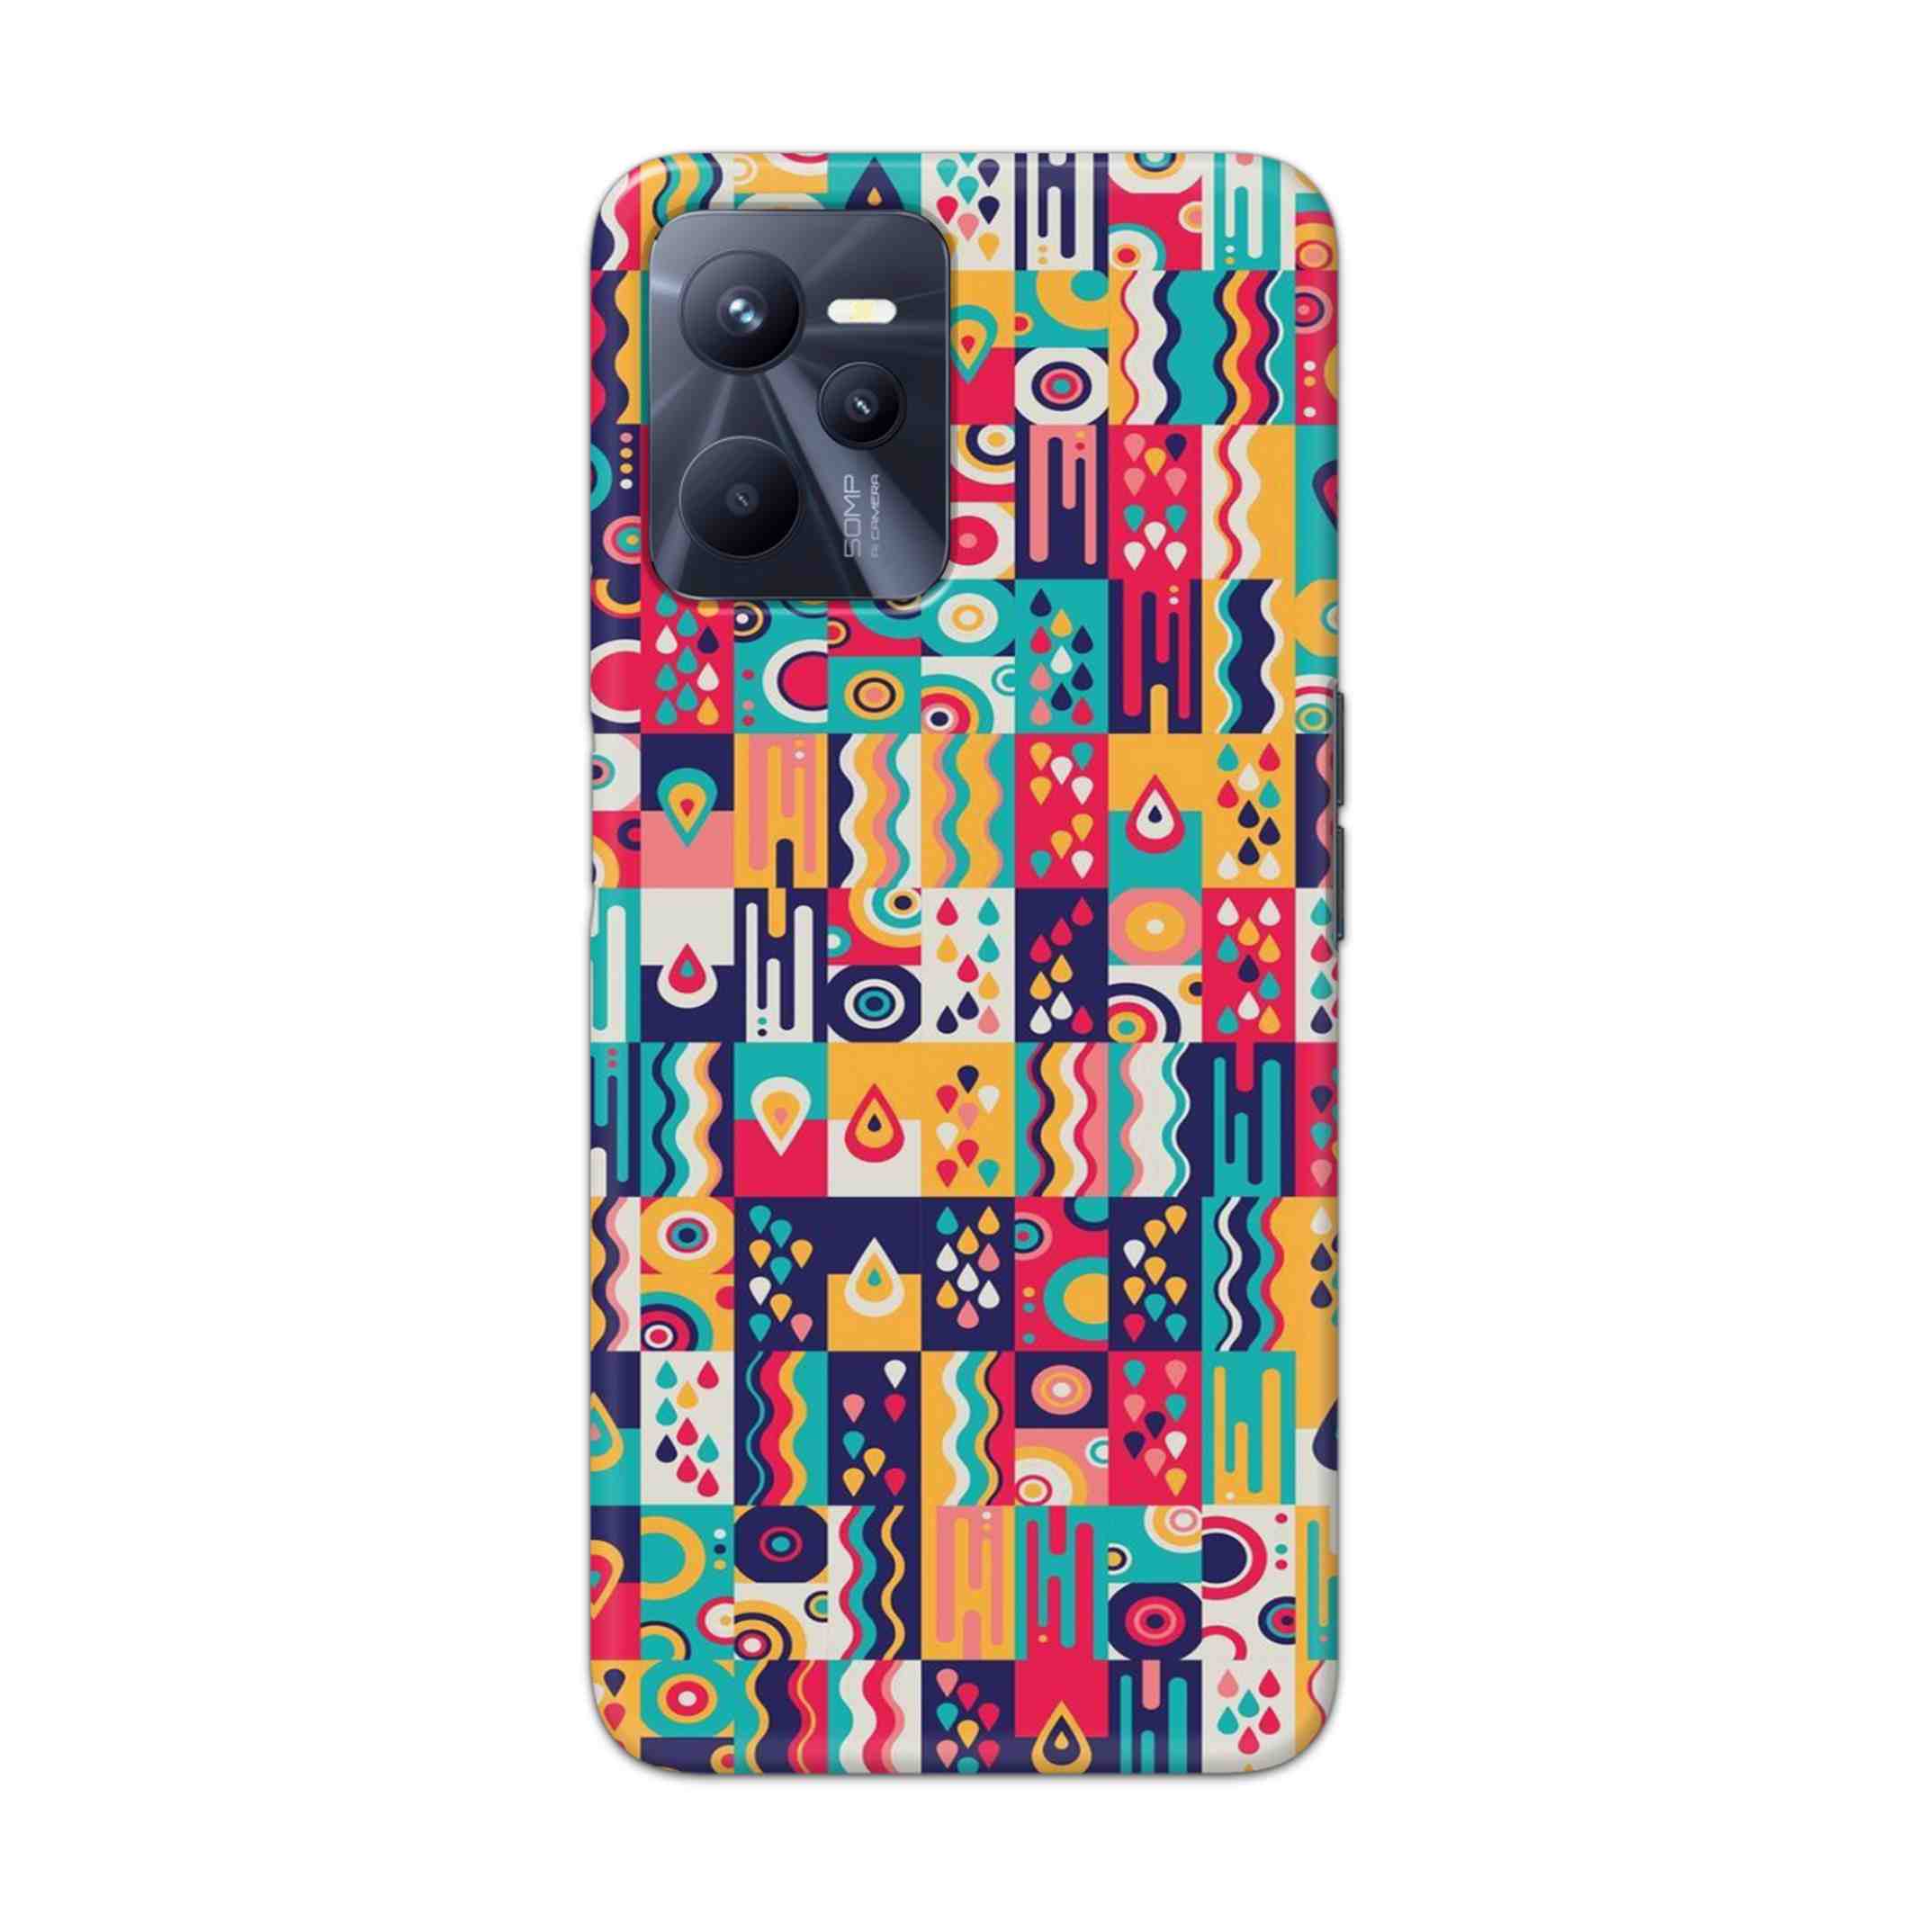 Buy Art Hard Back Mobile Phone Case Cover For Realme C35 Online